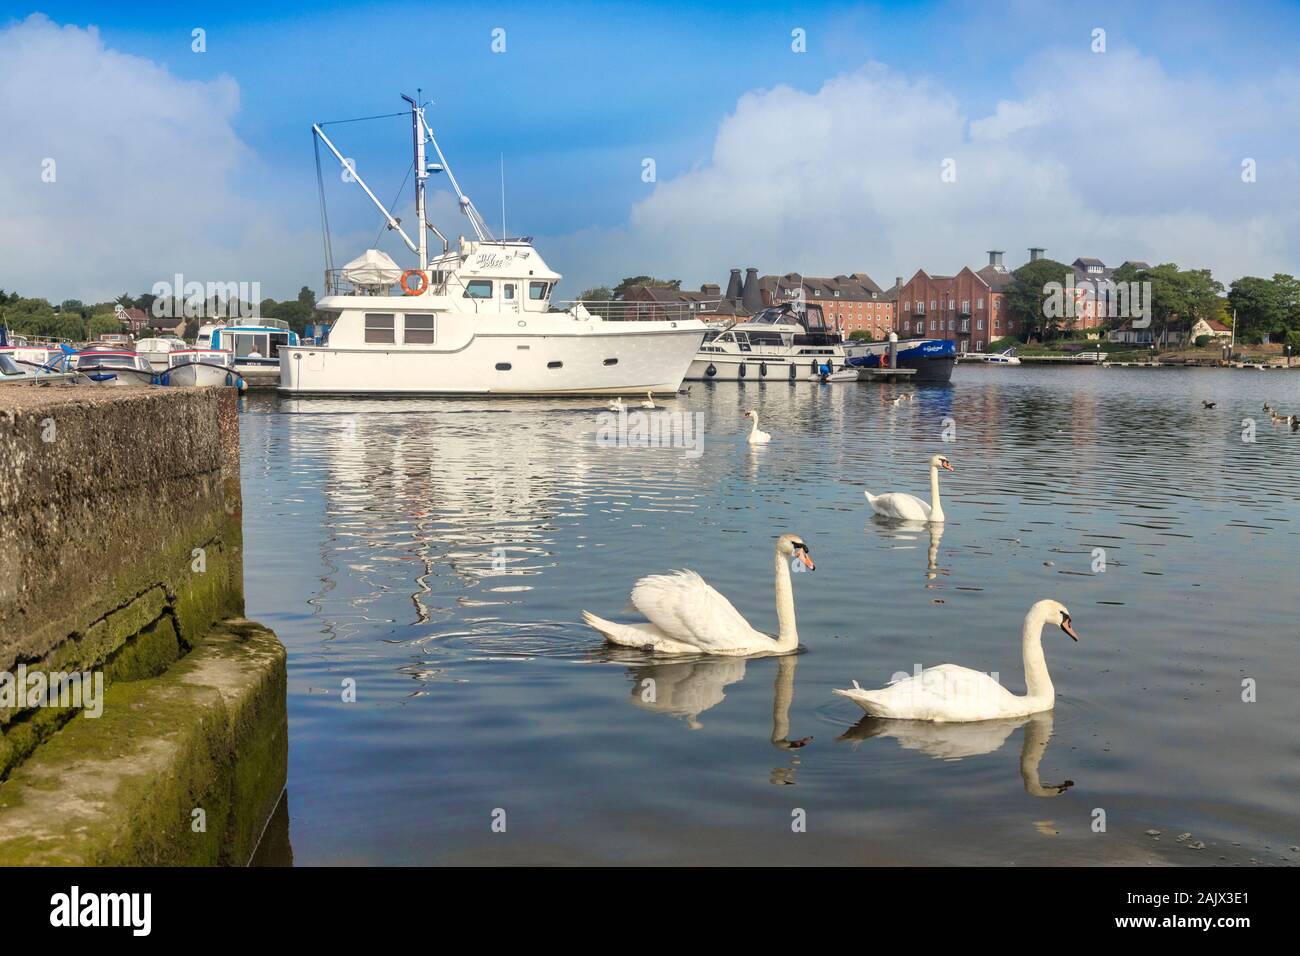 18 June 2019: Oulton Broad, Norfolk, UK - Swans and boats at the marina. Stock Photo